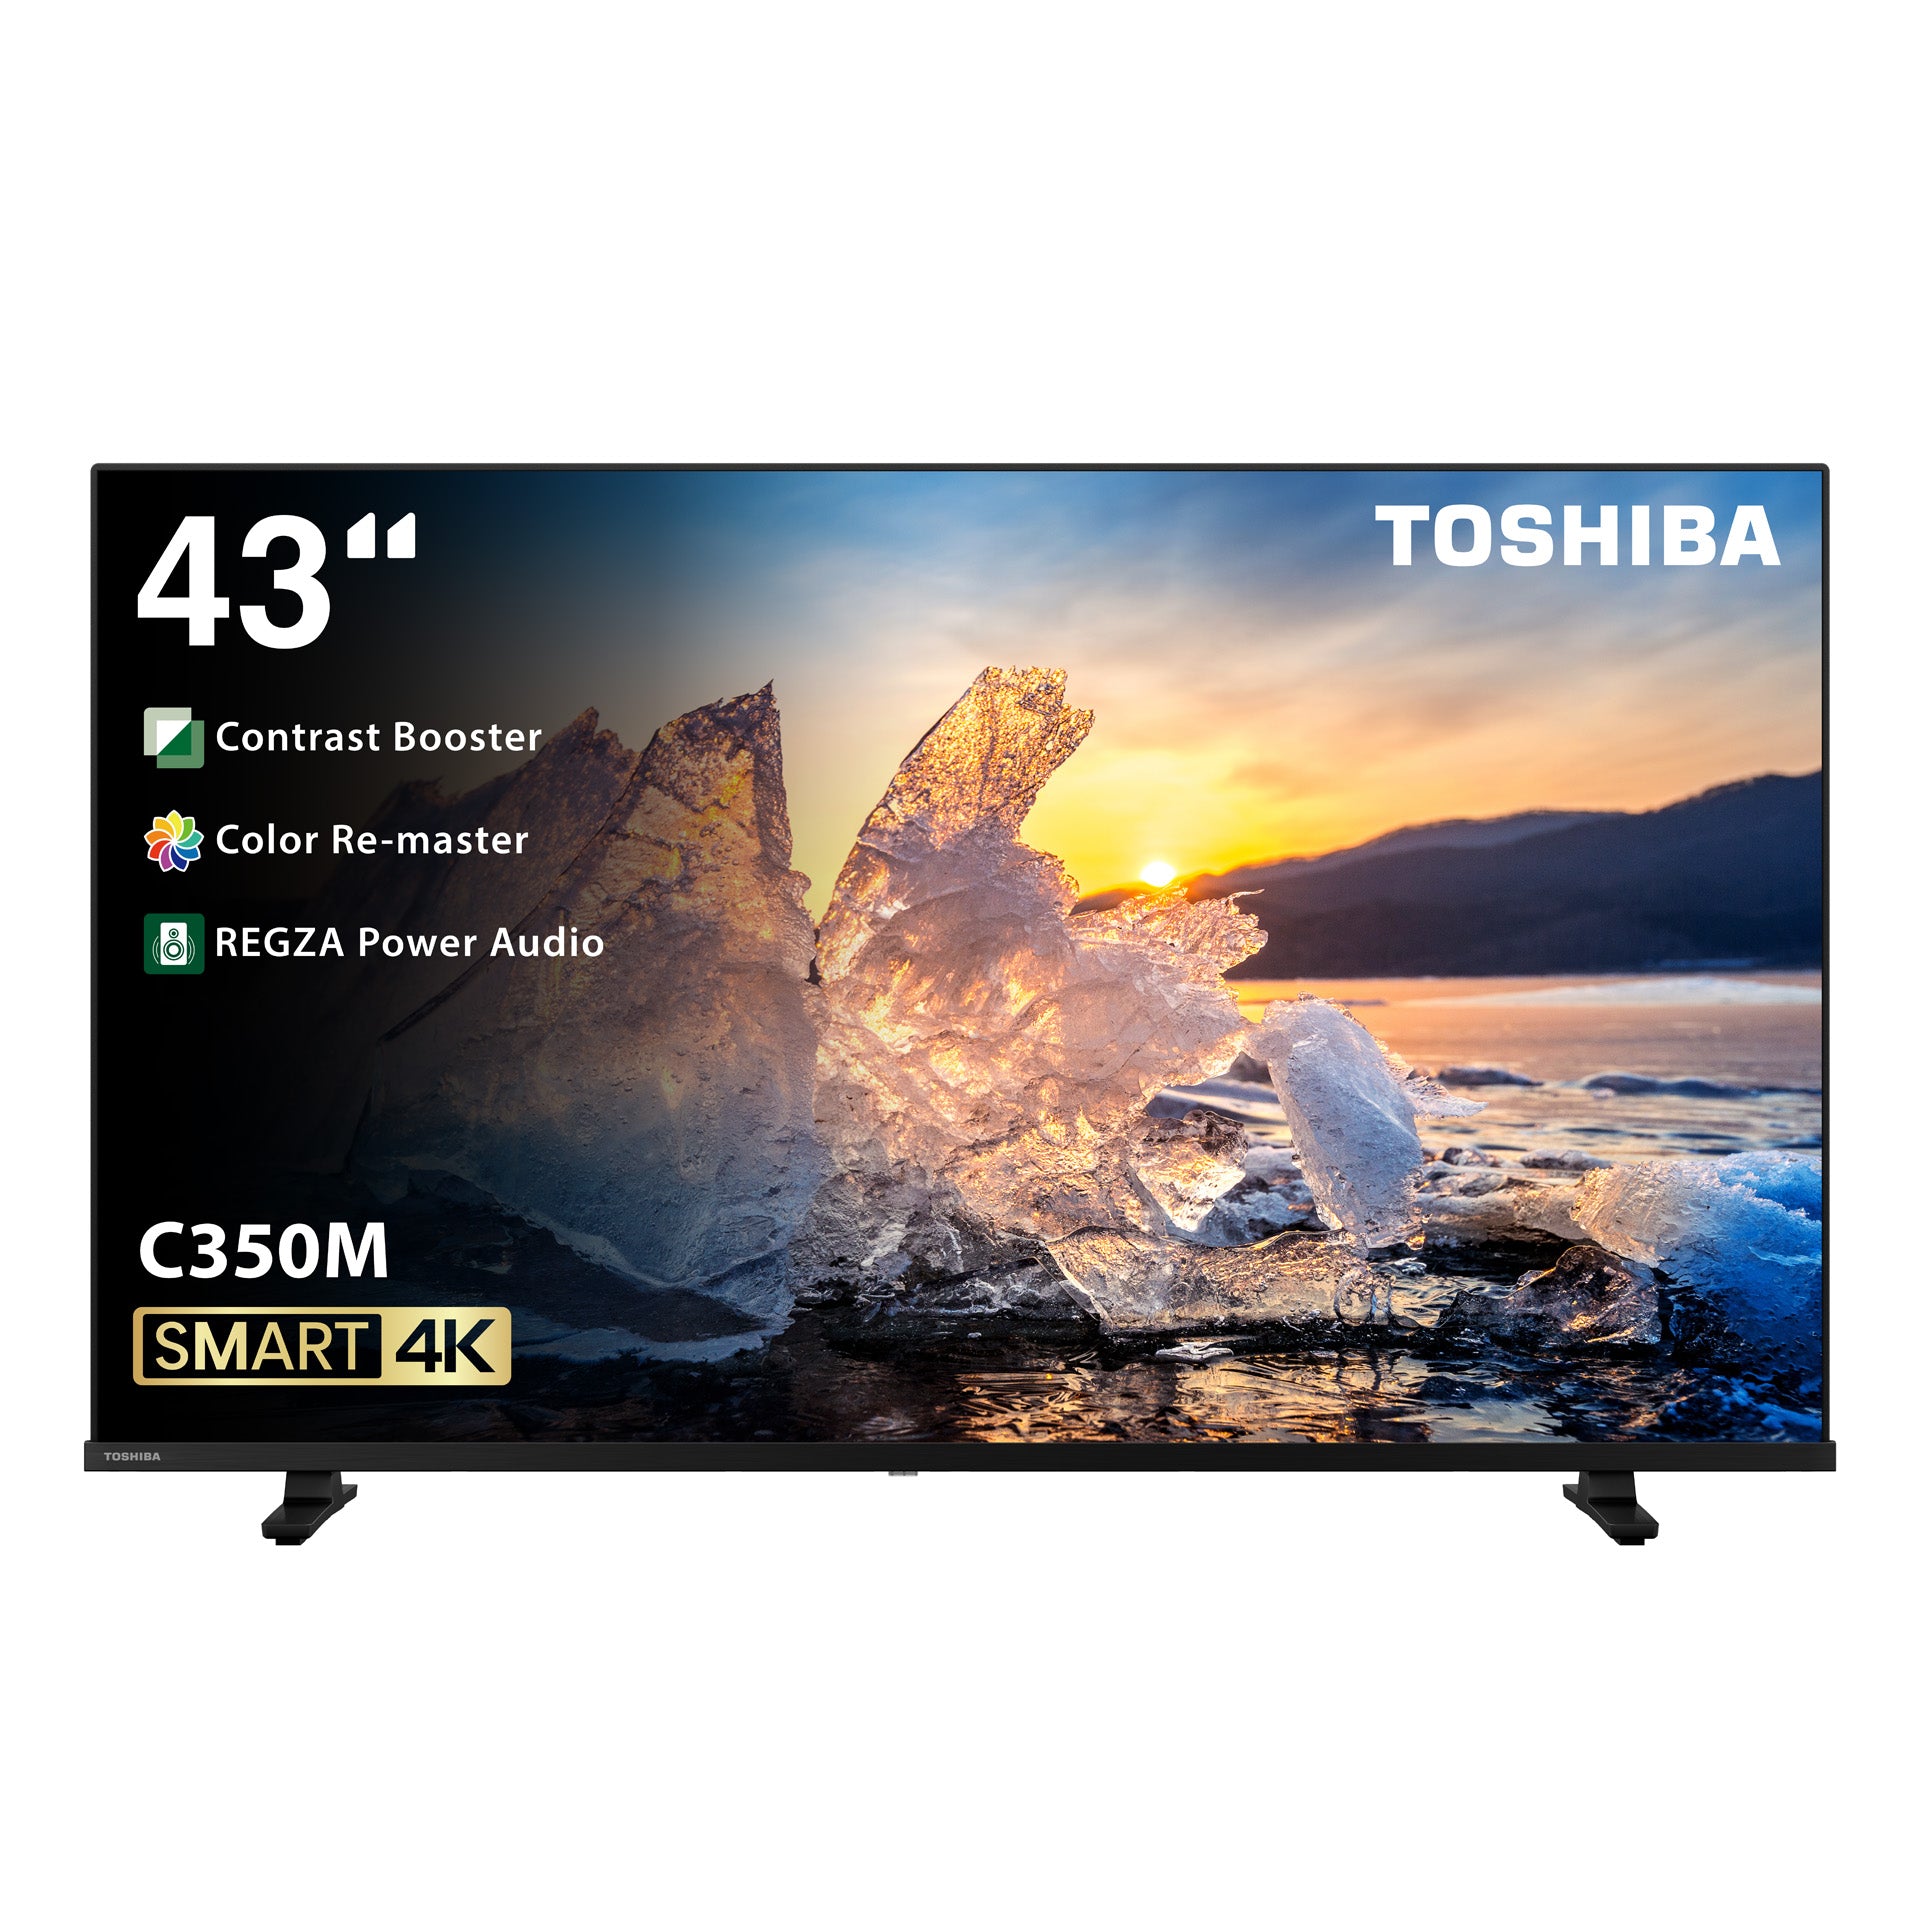 TOSHIBA 43" FHD SMART LED TV ROBIATI DISTRIBUTION C